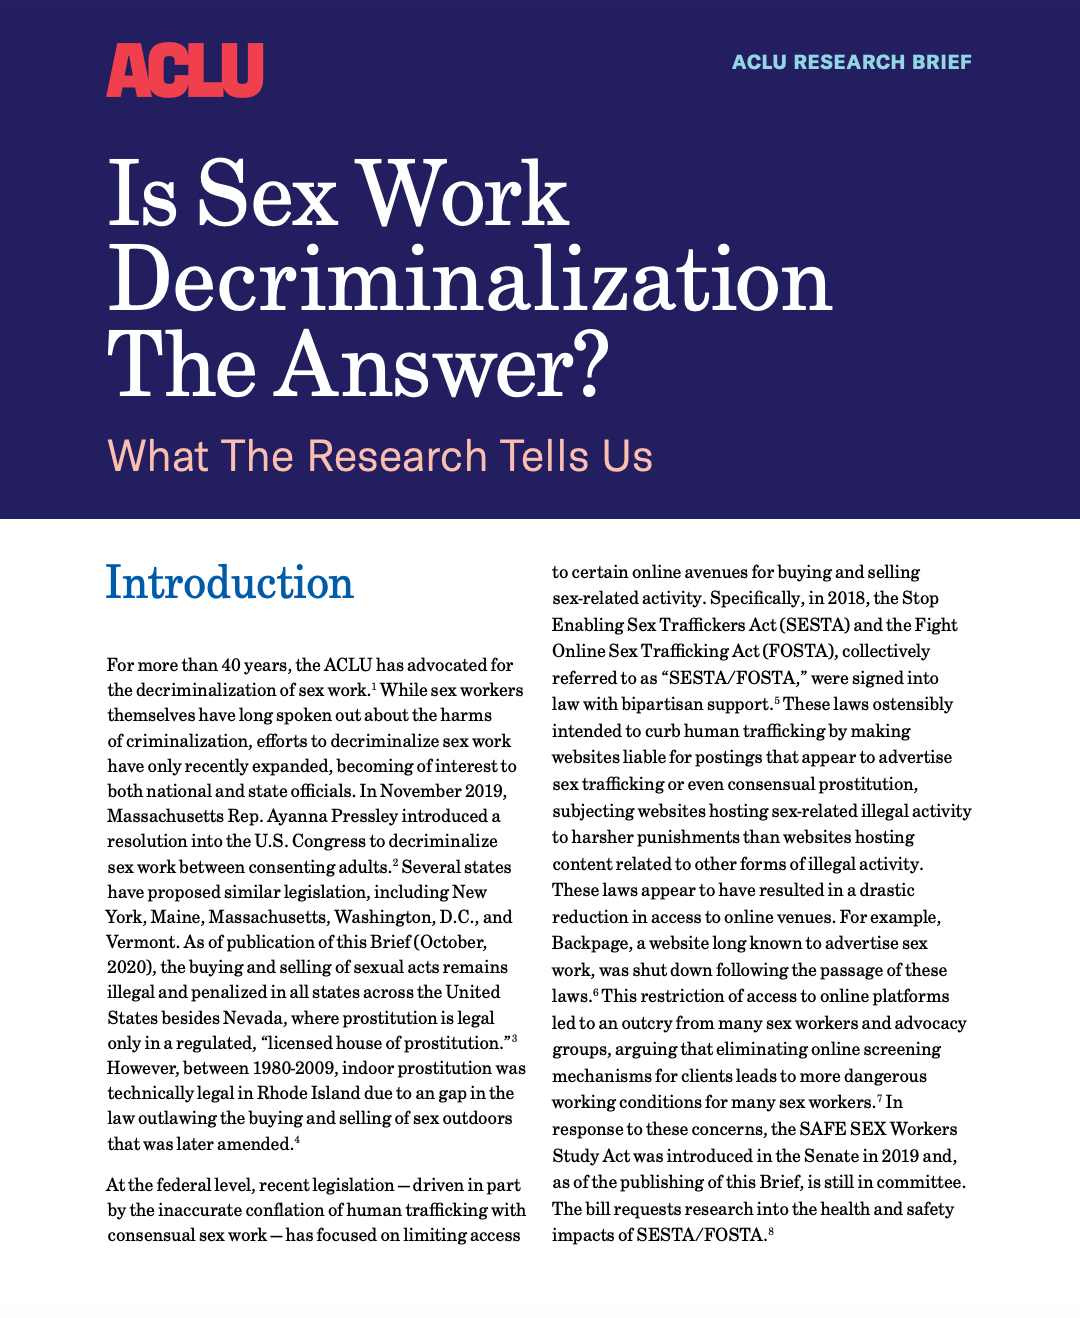 Is Sex Work Decriminalization the Answer?